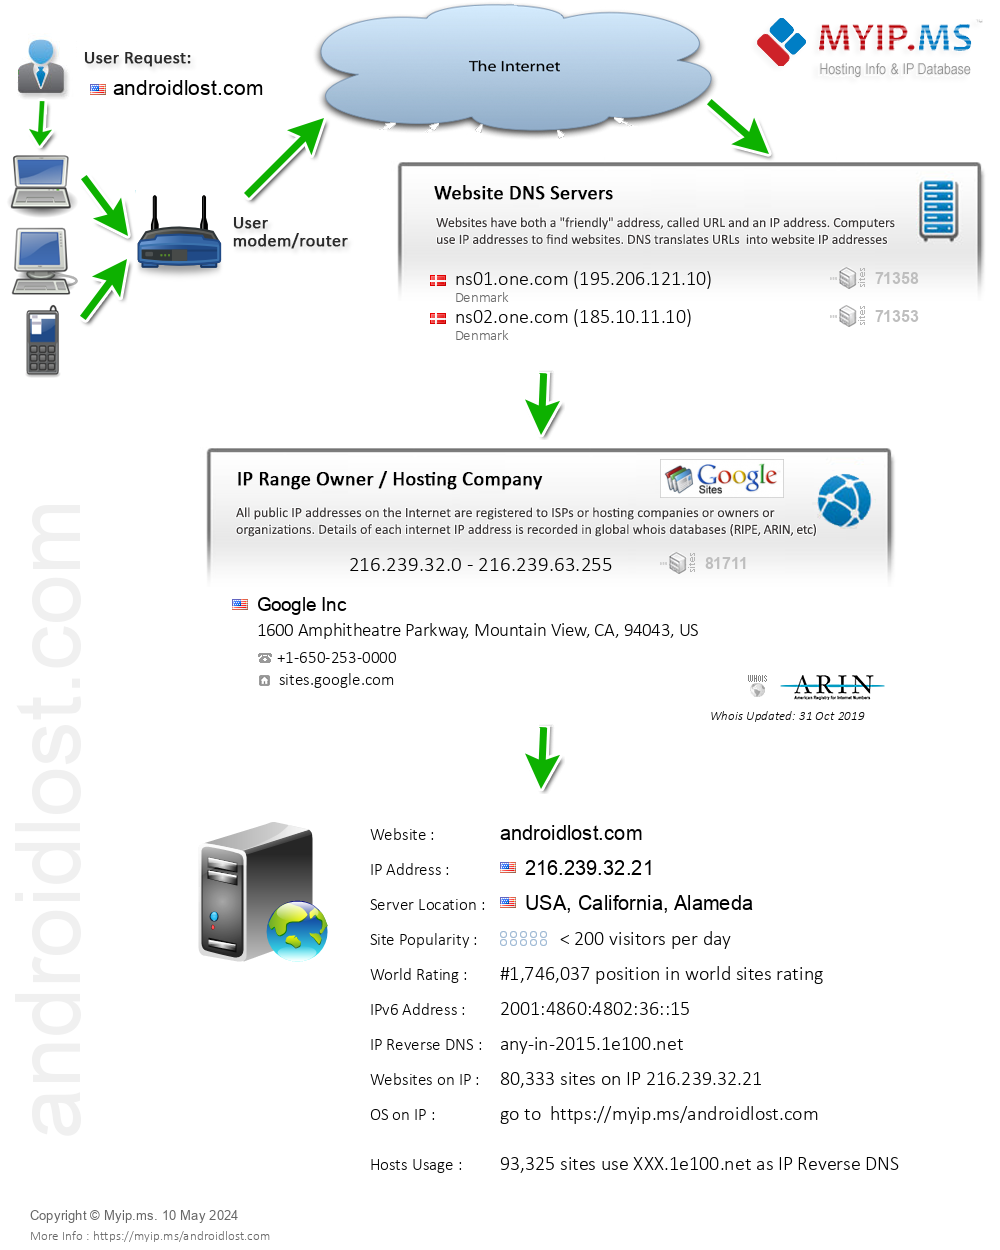 Androidlost.com - Website Hosting Visual IP Diagram